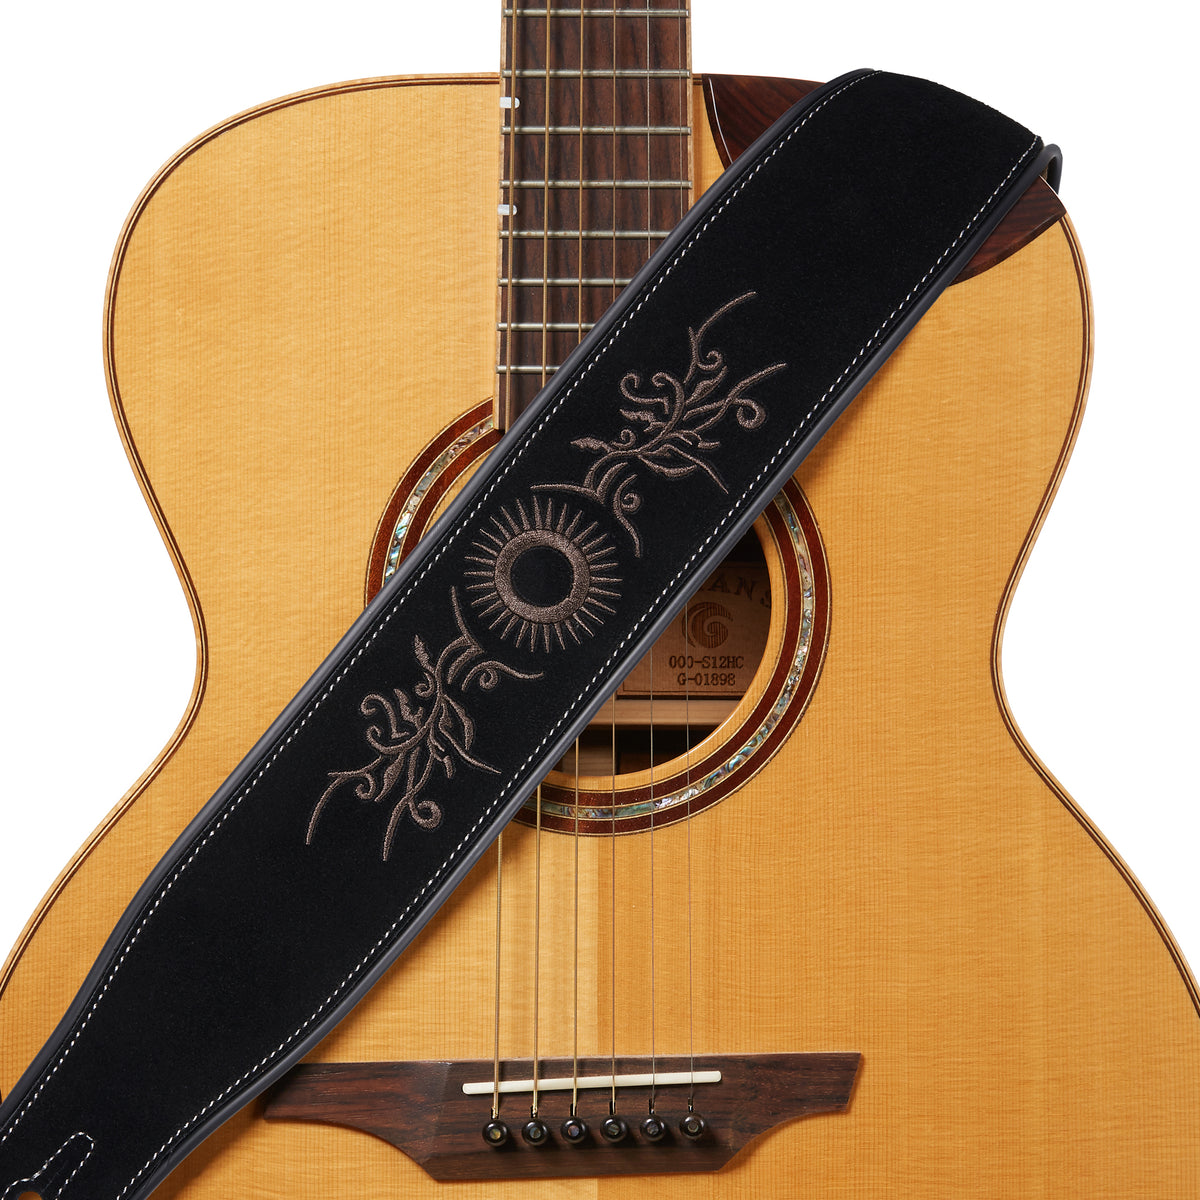 Multi Vivid Geometric Embroidered Guitar Strap